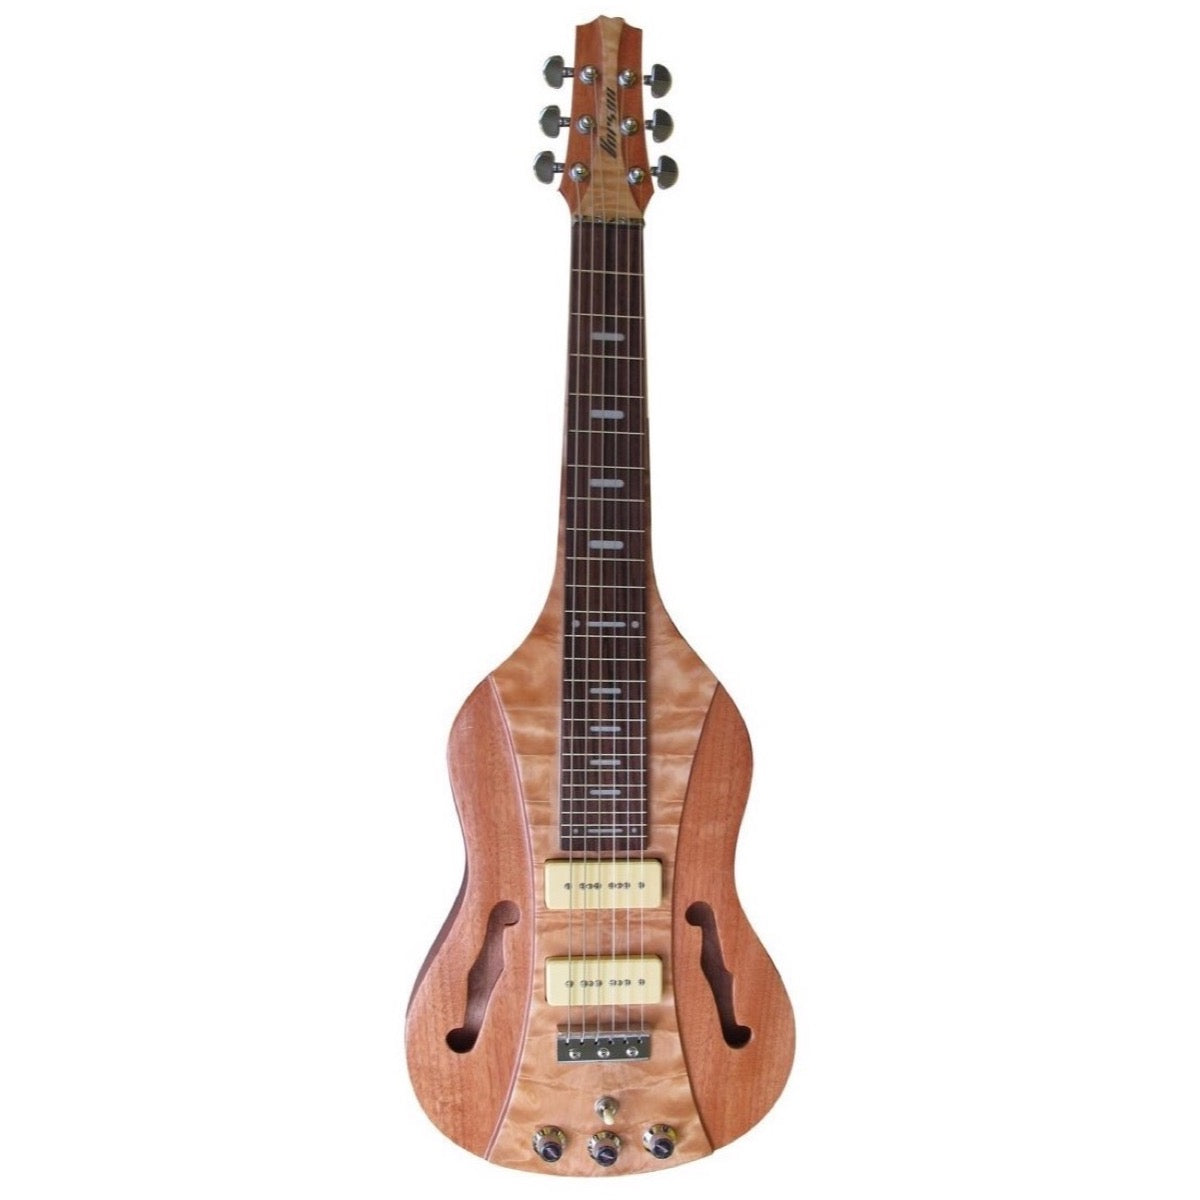 Vorson FLSL-220 Pro Lap Steel Guitar with F-Holes, Natural – Same Day Music